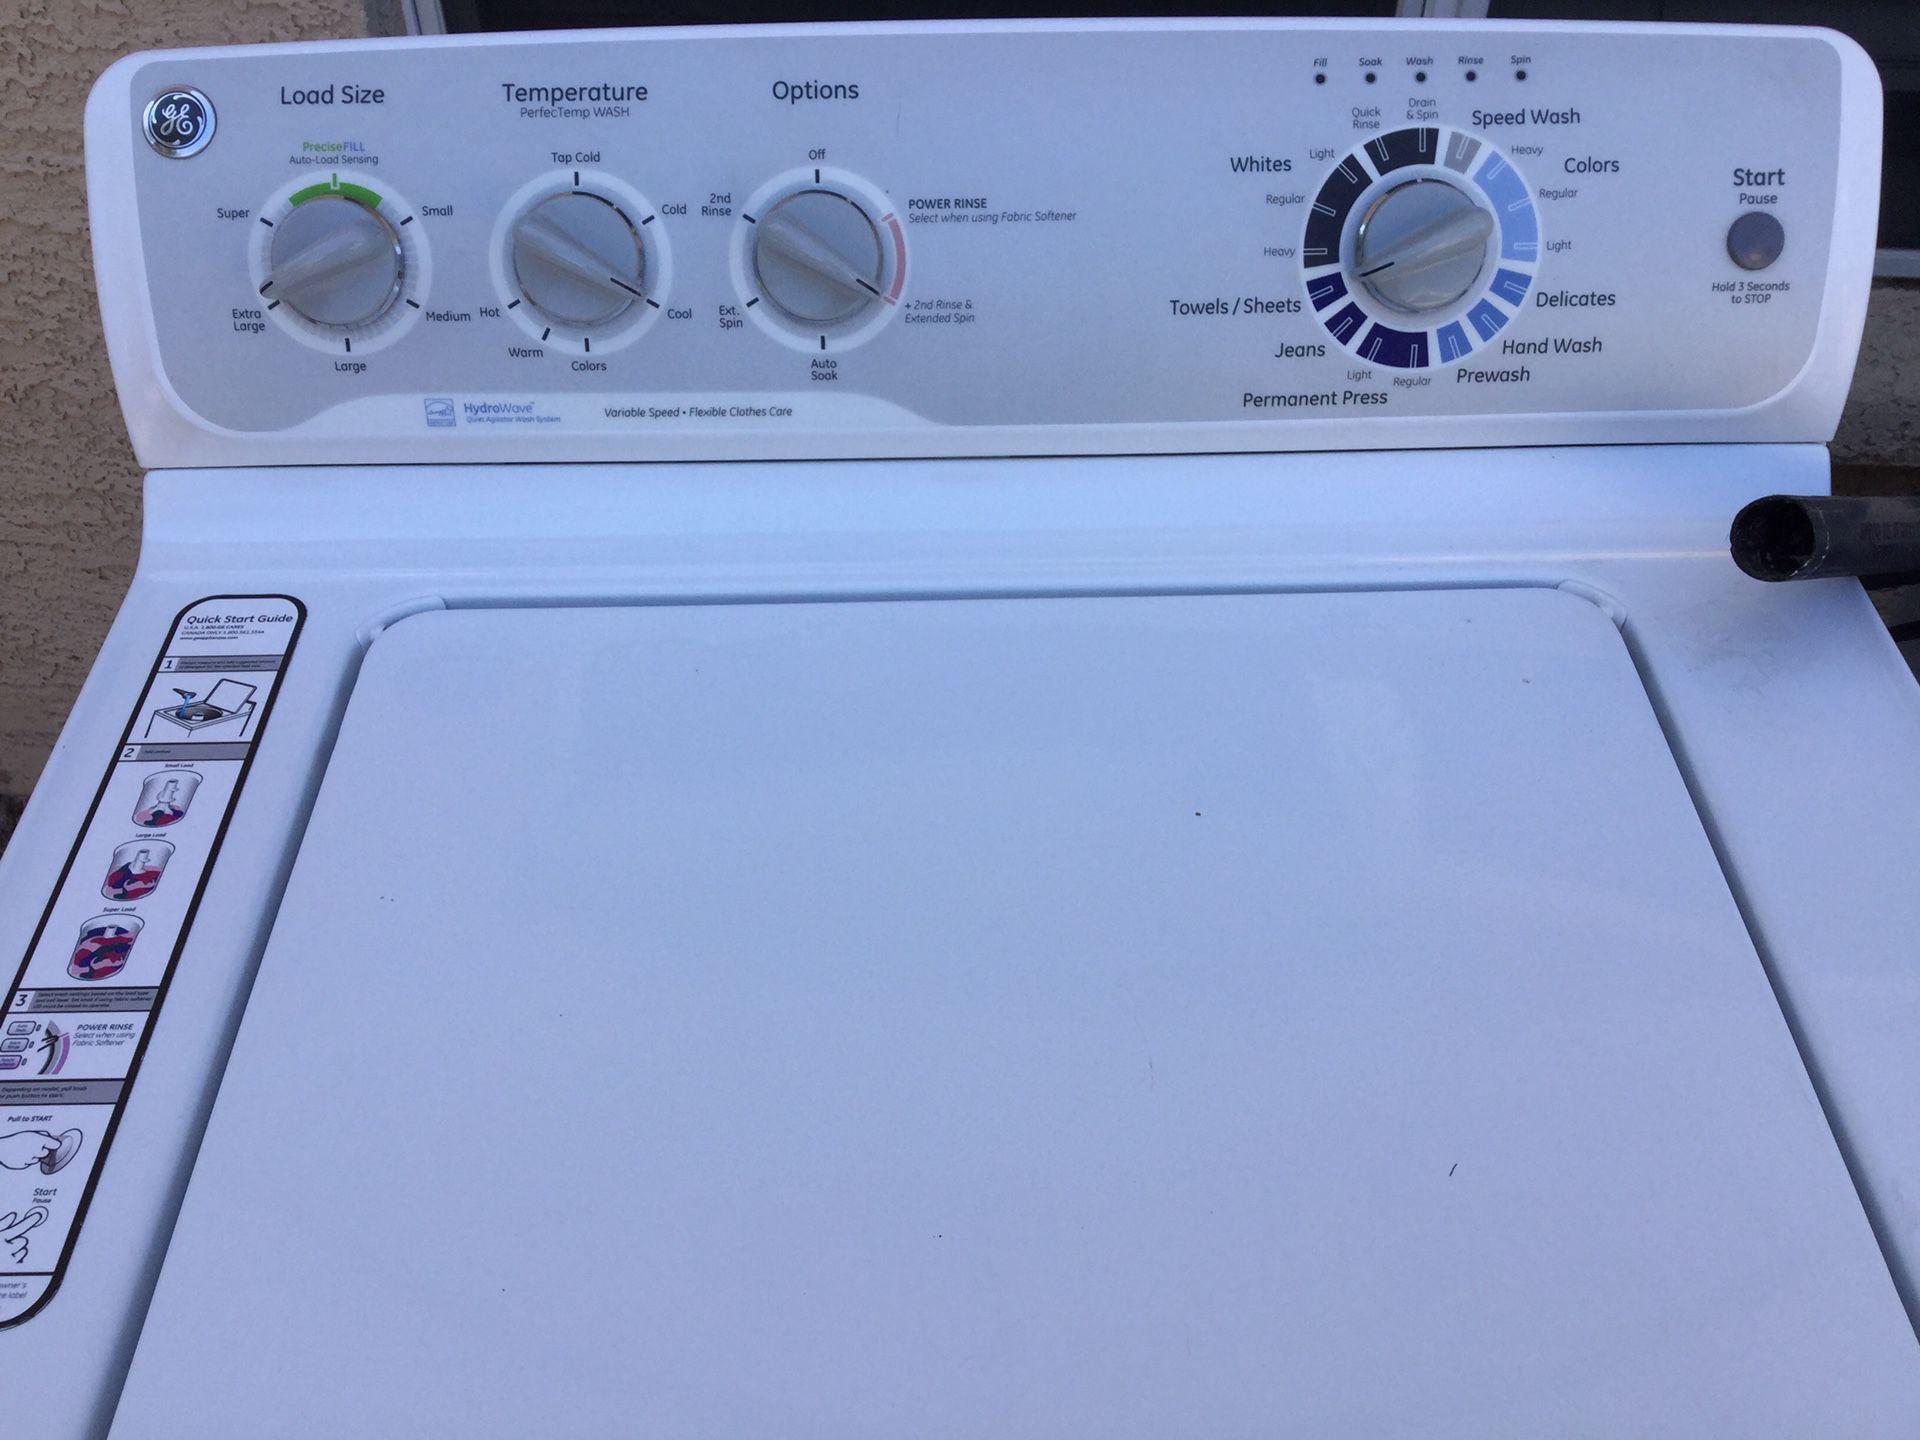 Washer      “GE Hydrowave Quiet Agitator Washing System” High Quality 